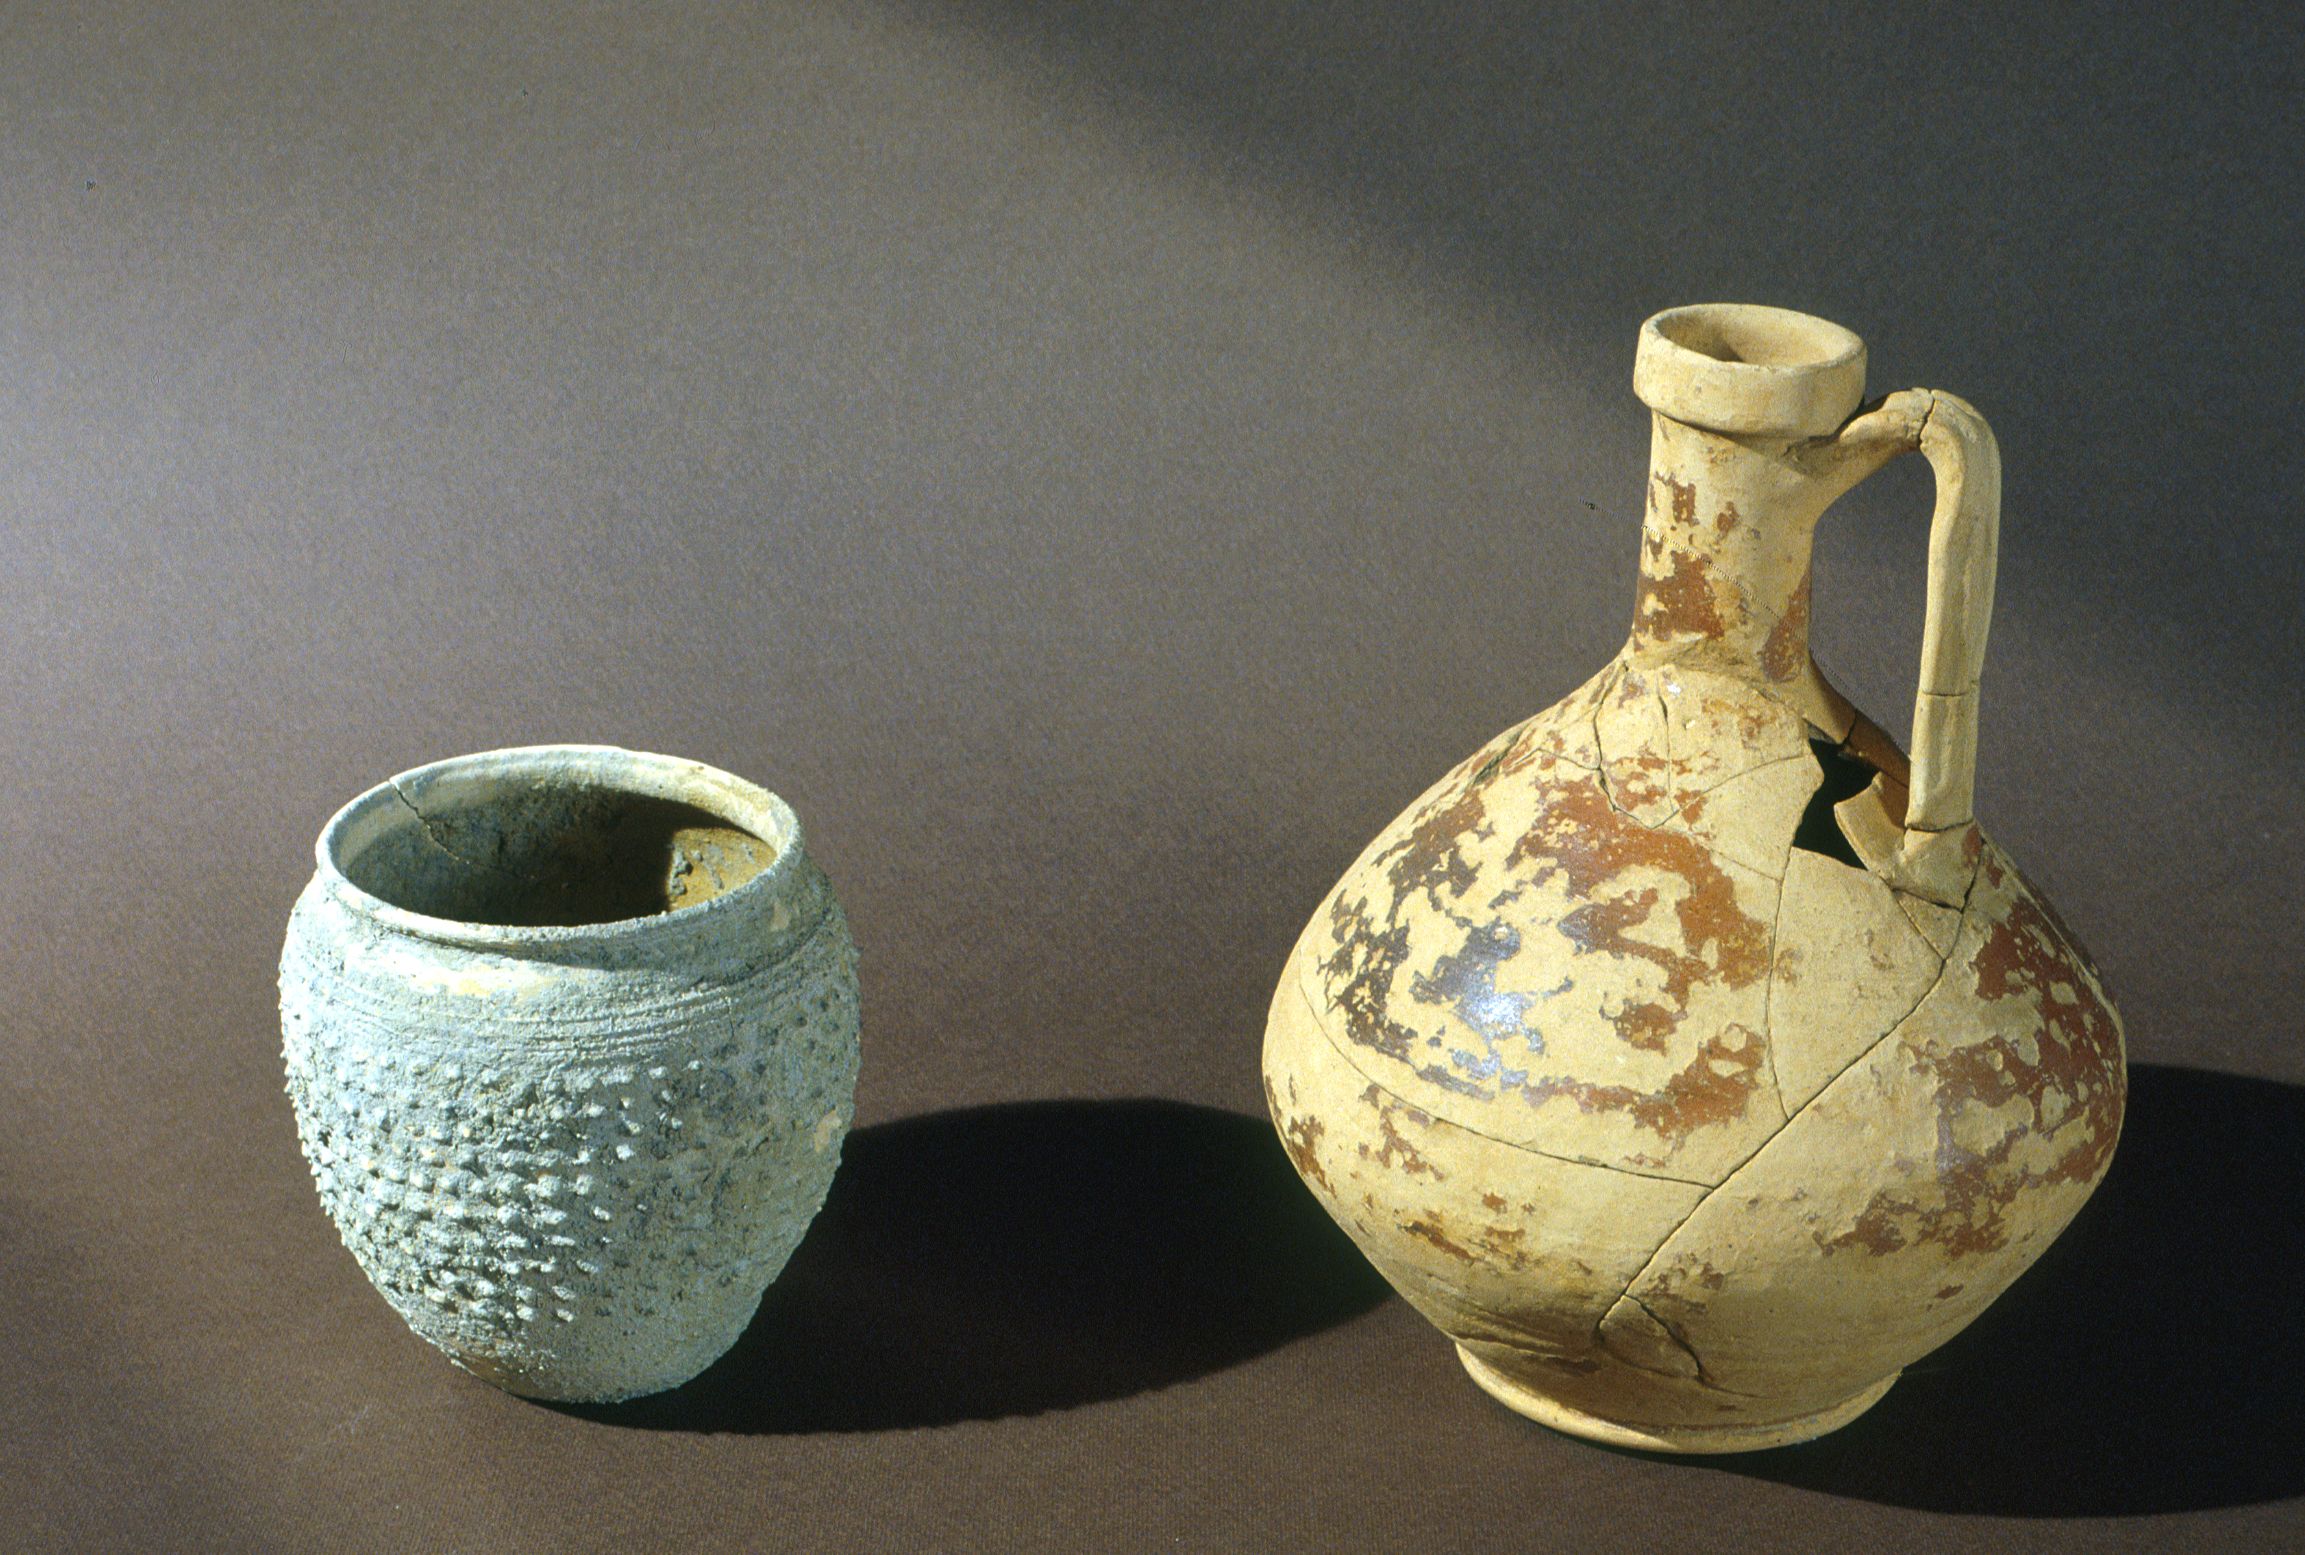 Vasellame romano, museo archeologico